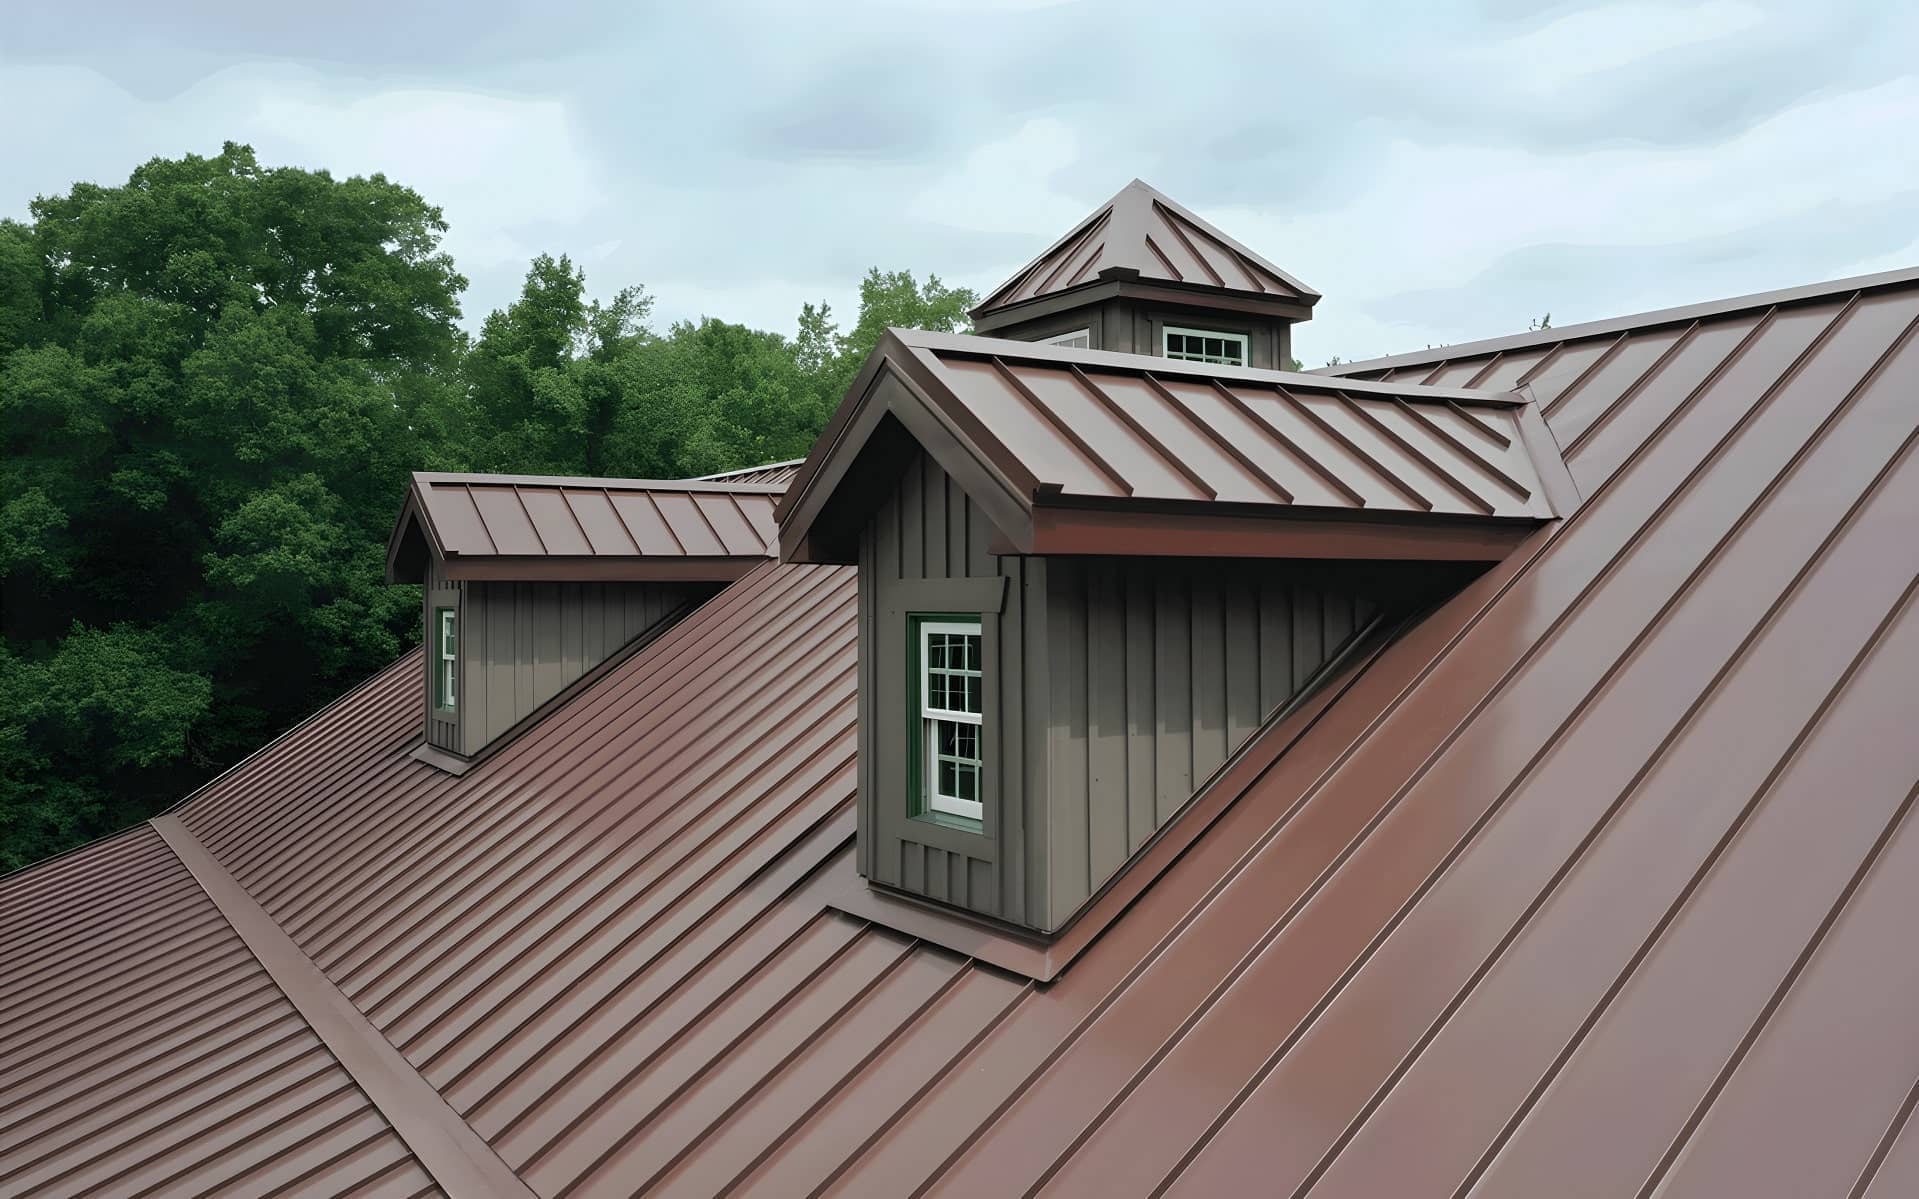 Metal Roofing Lifespan: How Long Does Metal Roofing Last?